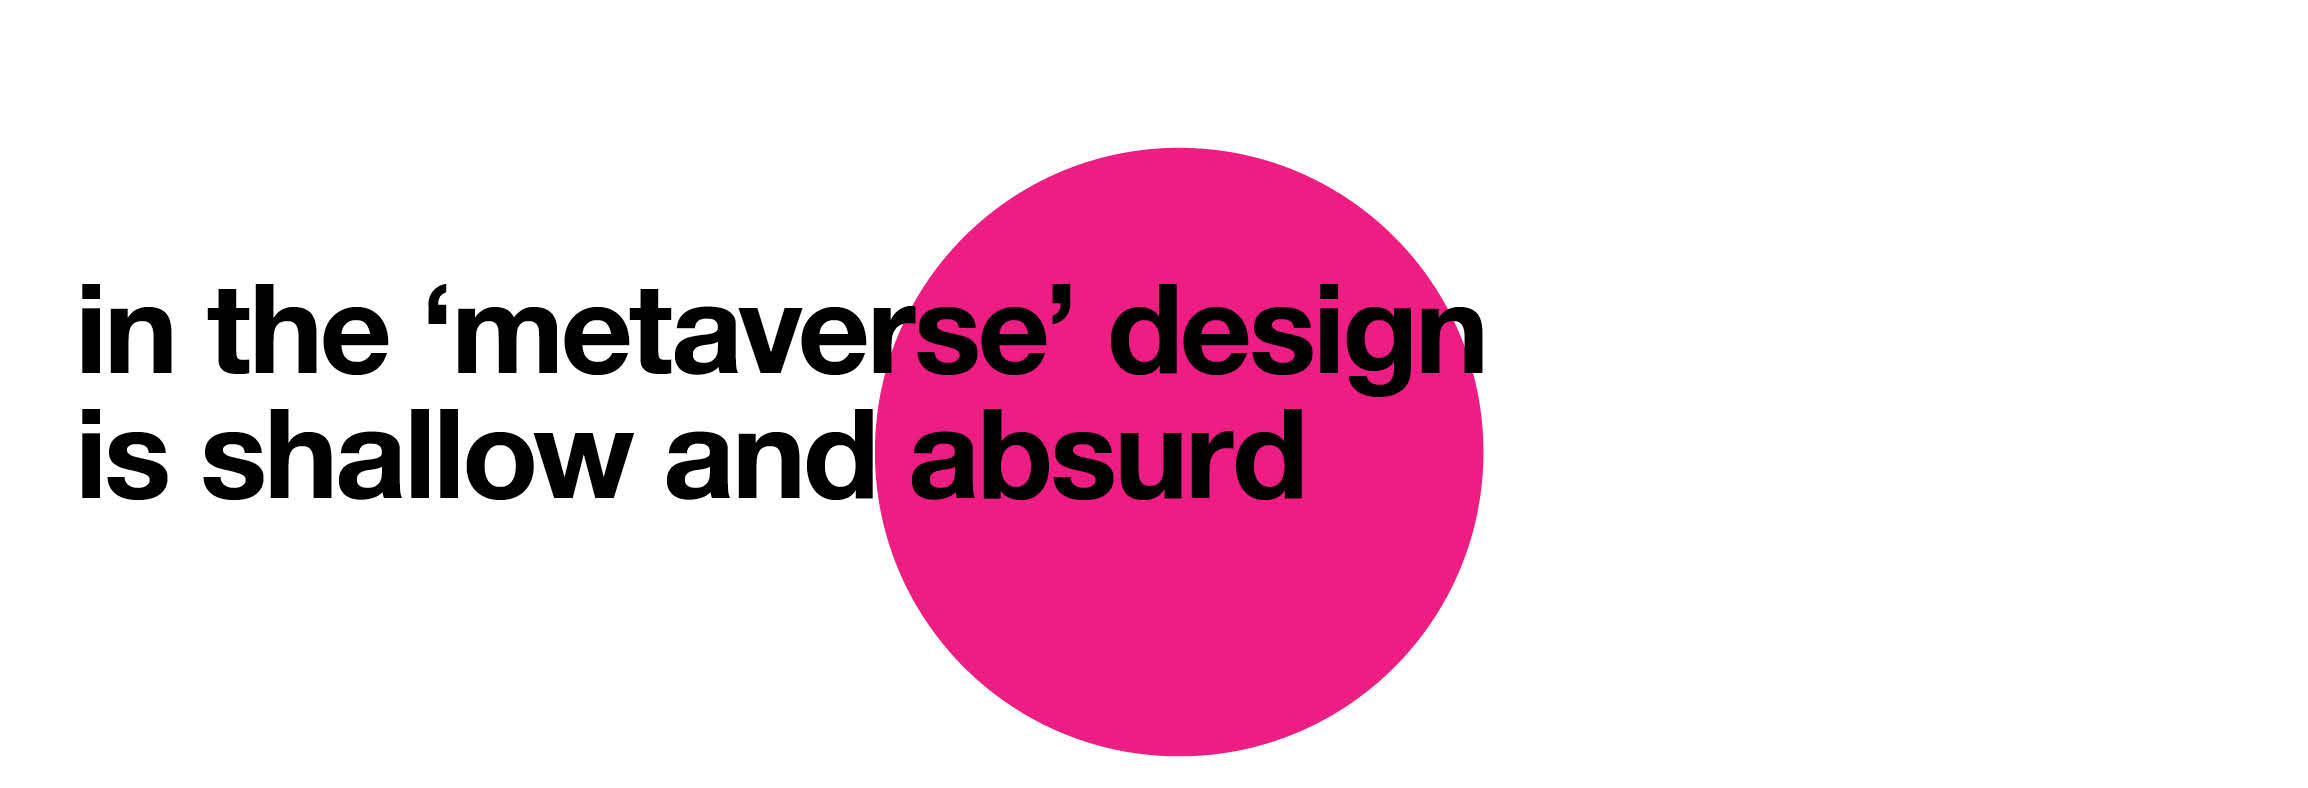 the 'metaverse' will make design irrelevant